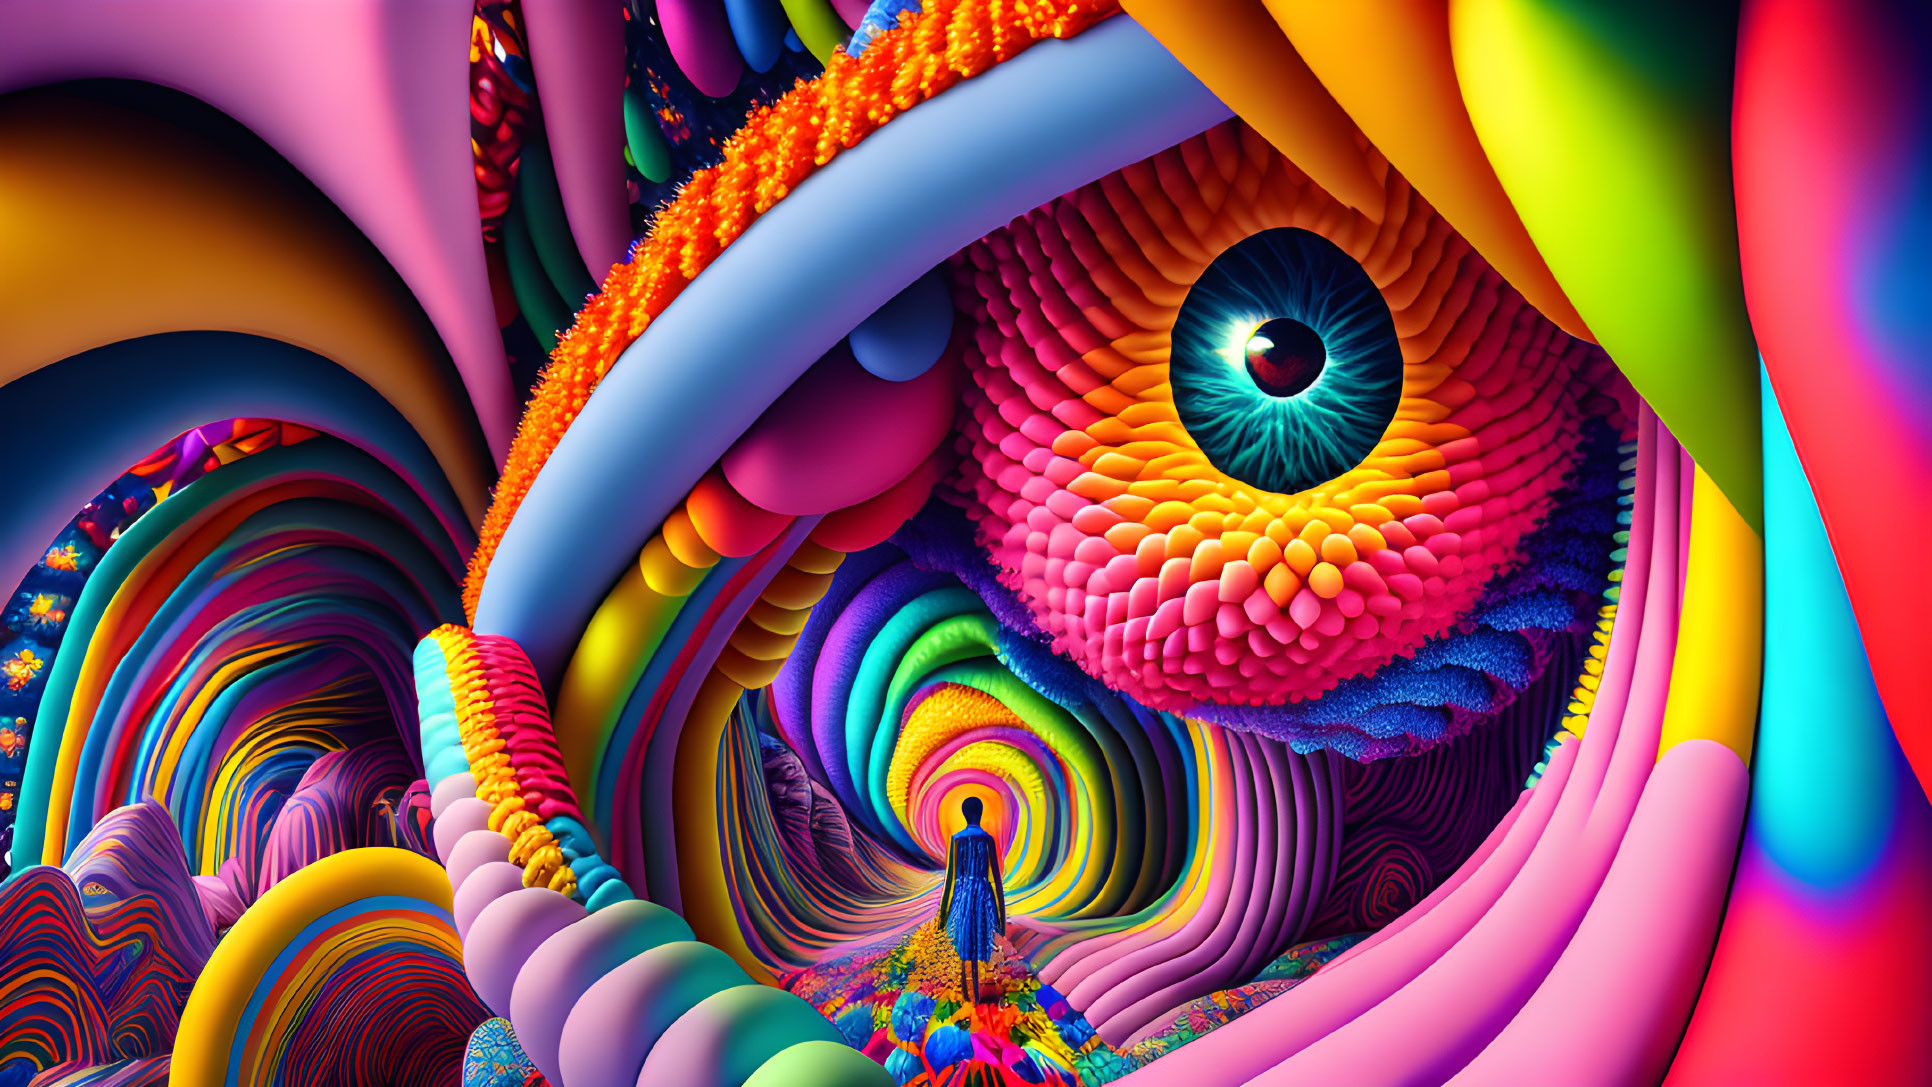 Colorful psychedelic digital artwork with surreal landscape.